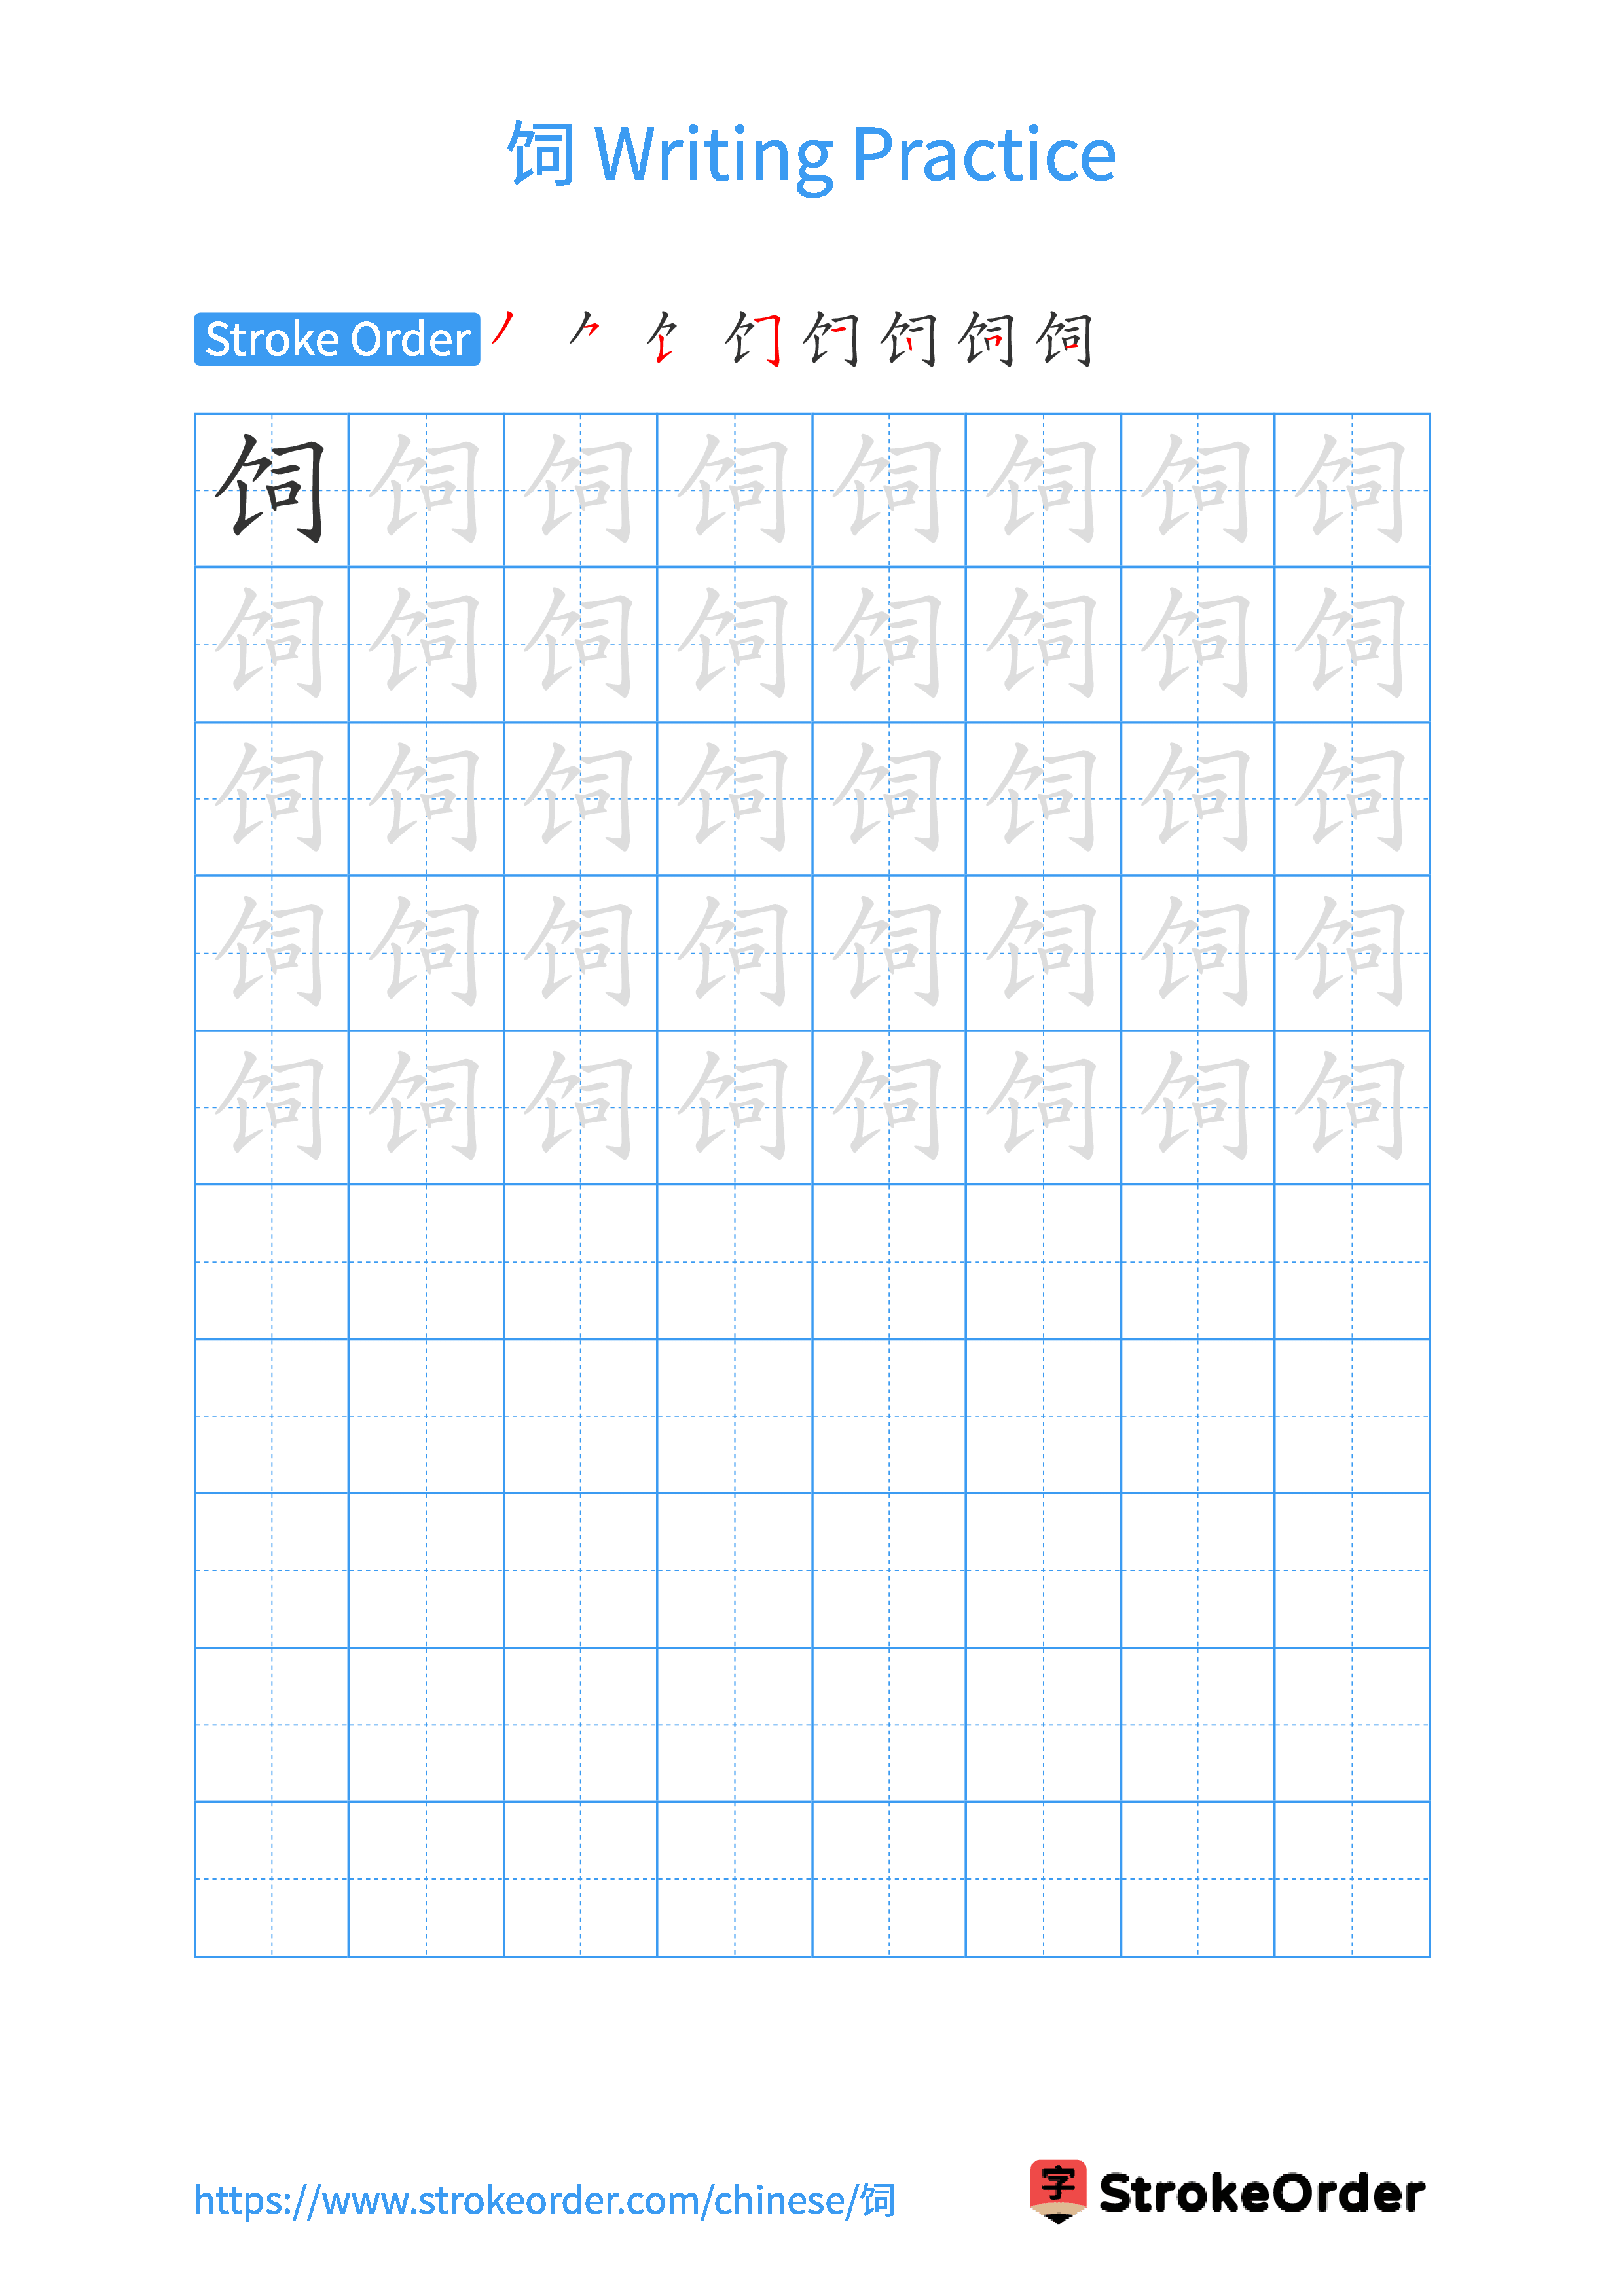 Printable Handwriting Practice Worksheet of the Chinese character 饲 in Portrait Orientation (Tian Zi Ge)